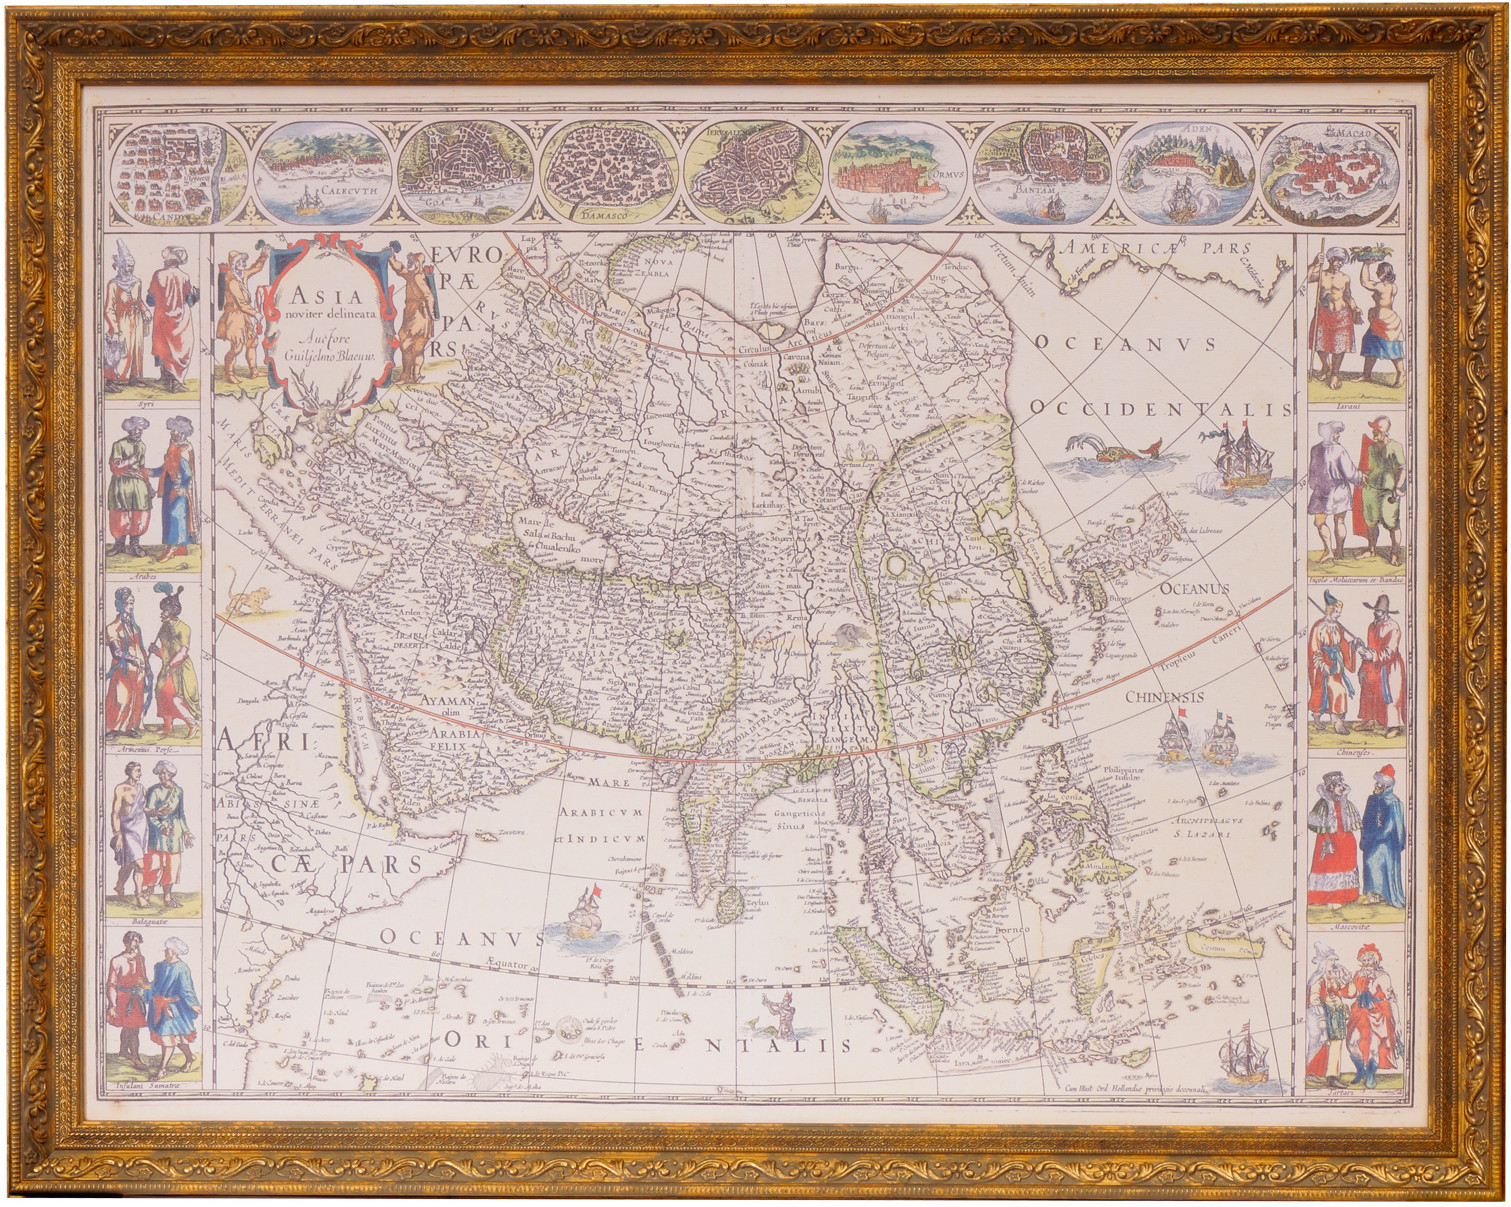 Asia 17. Карта Азии картографов 17 века. Карта Азии 17 век. Карта Азии 17 века. Карта Азии 16 века.